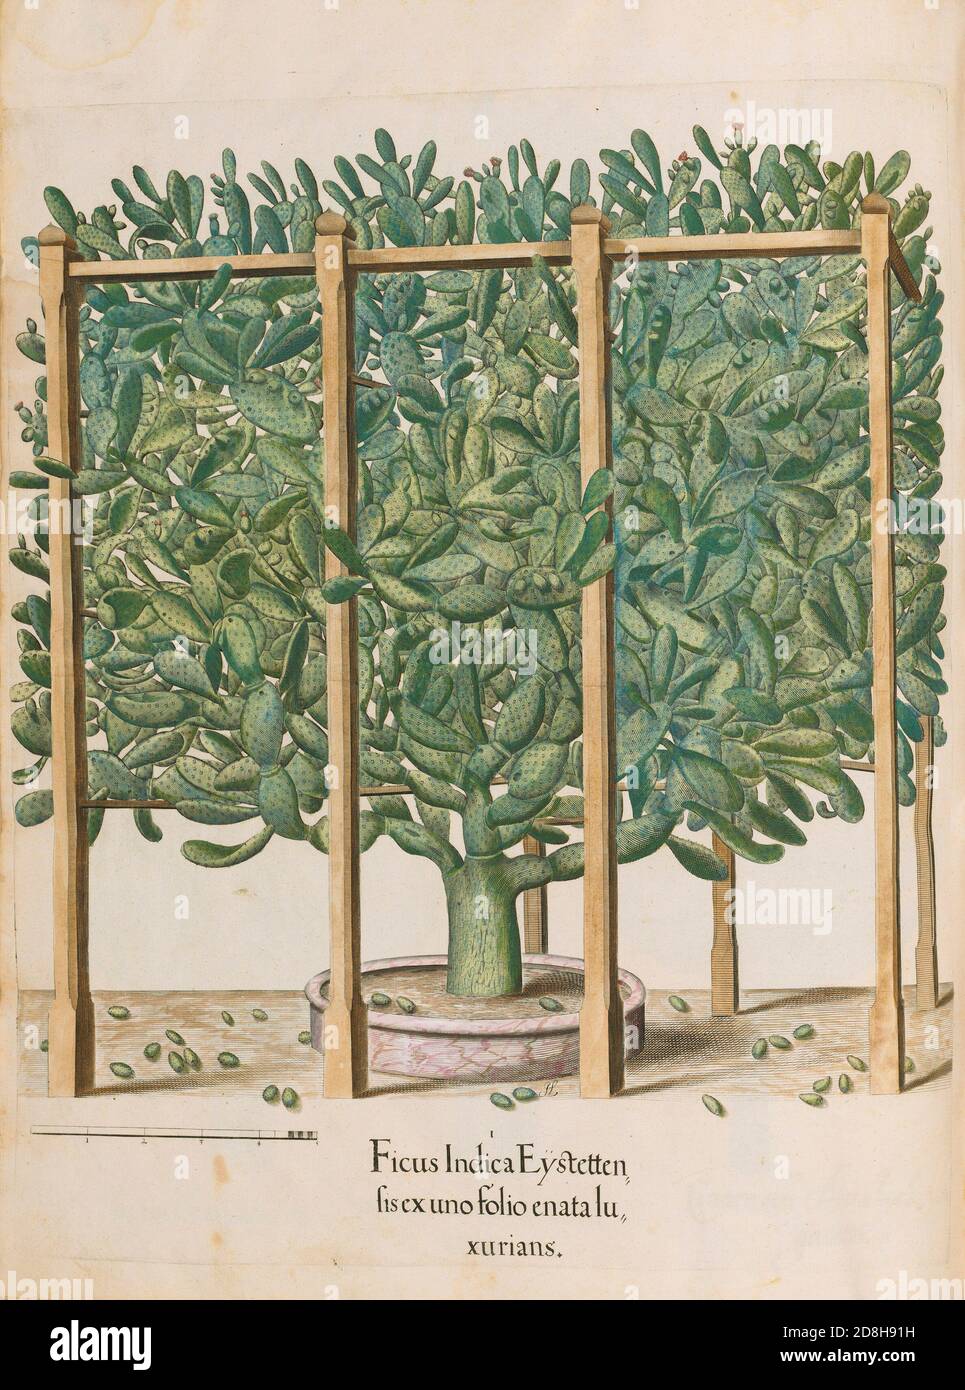 Ficus. Ficus Indica Eystetten fis ex uno folio enata lu xurians. Basil Besler, Hortus Eystettensis 1613. Stock Photo